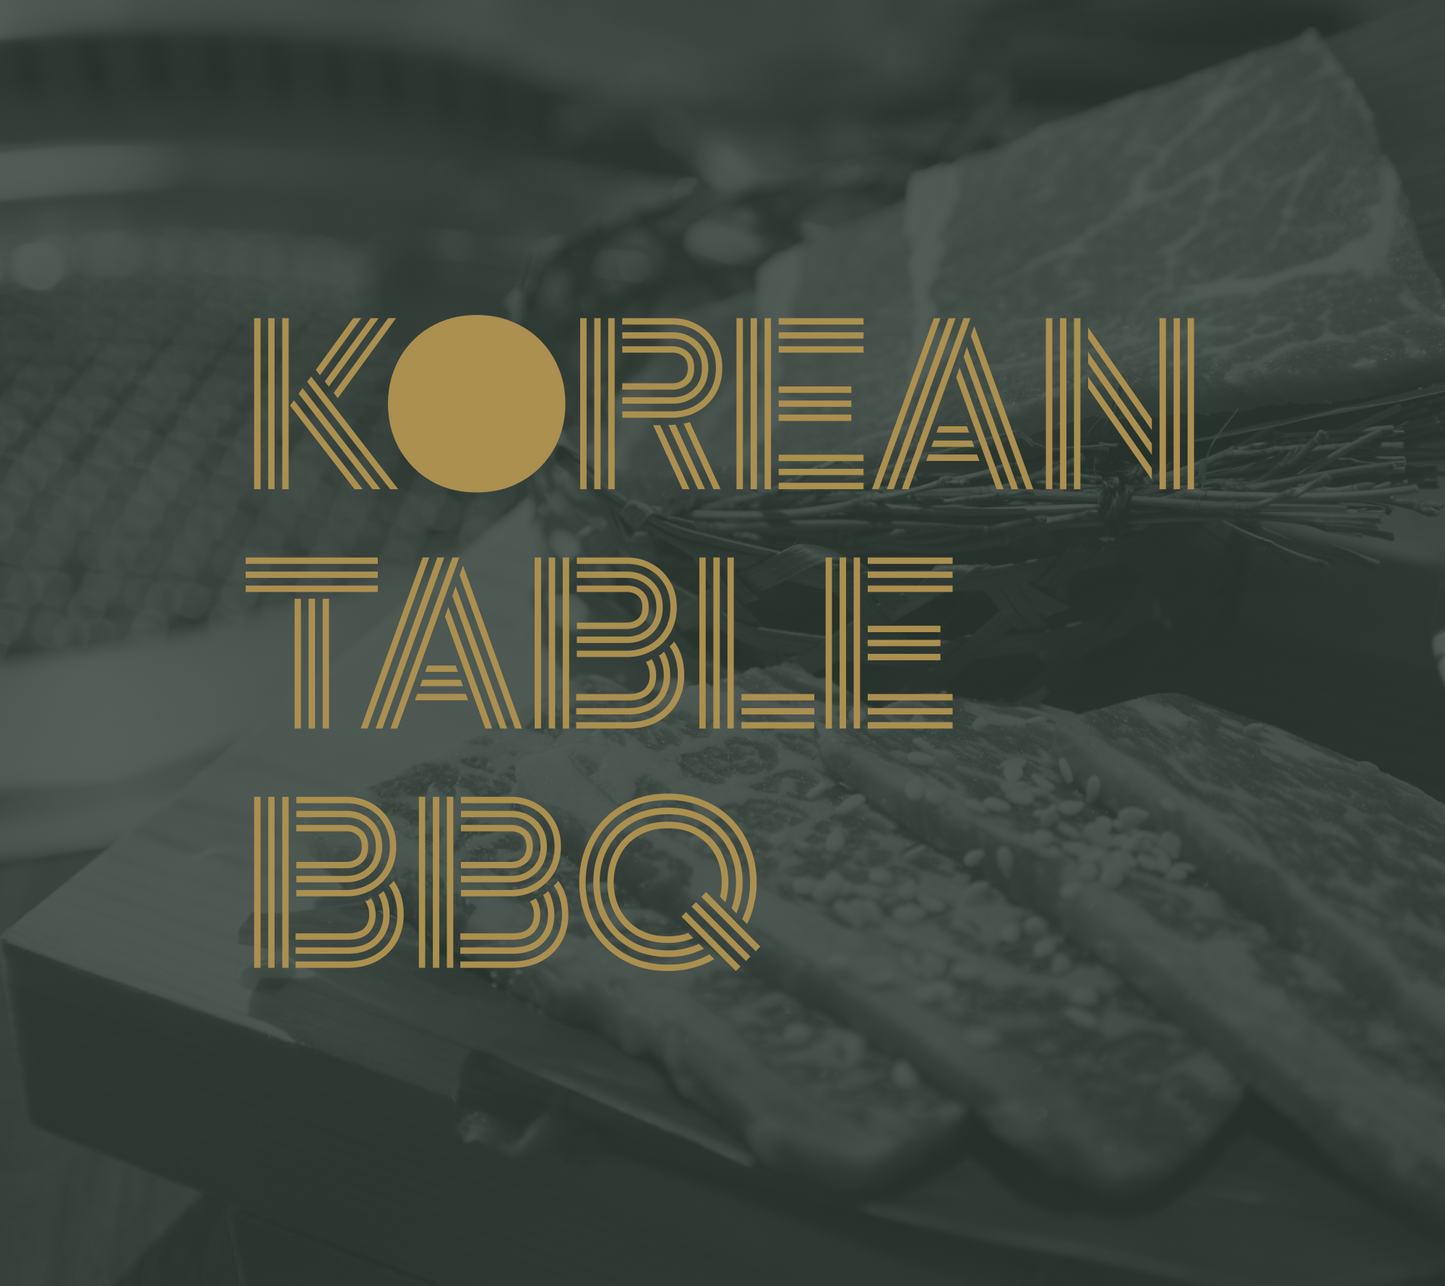 Korean Table BBQ